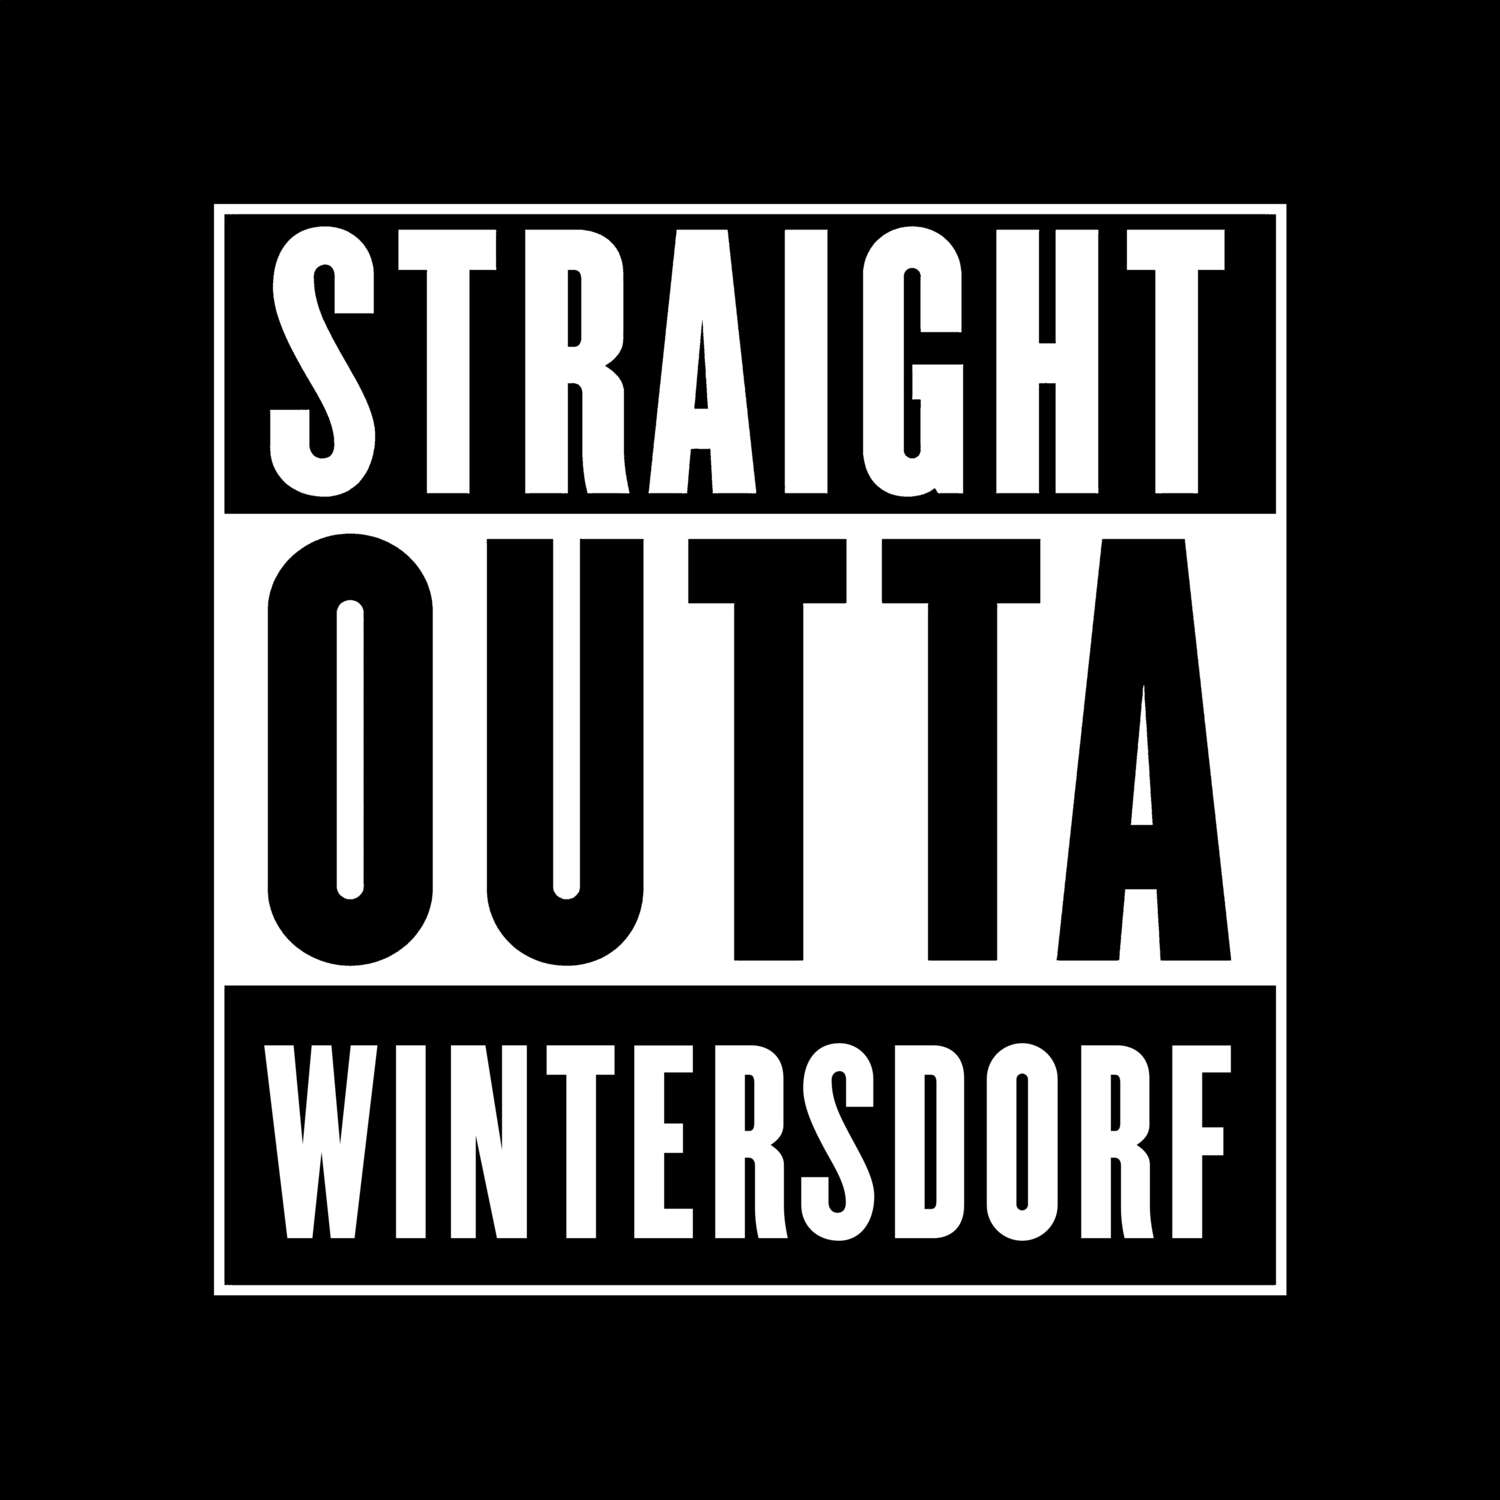 Wintersdorf T-Shirt »Straight Outta«